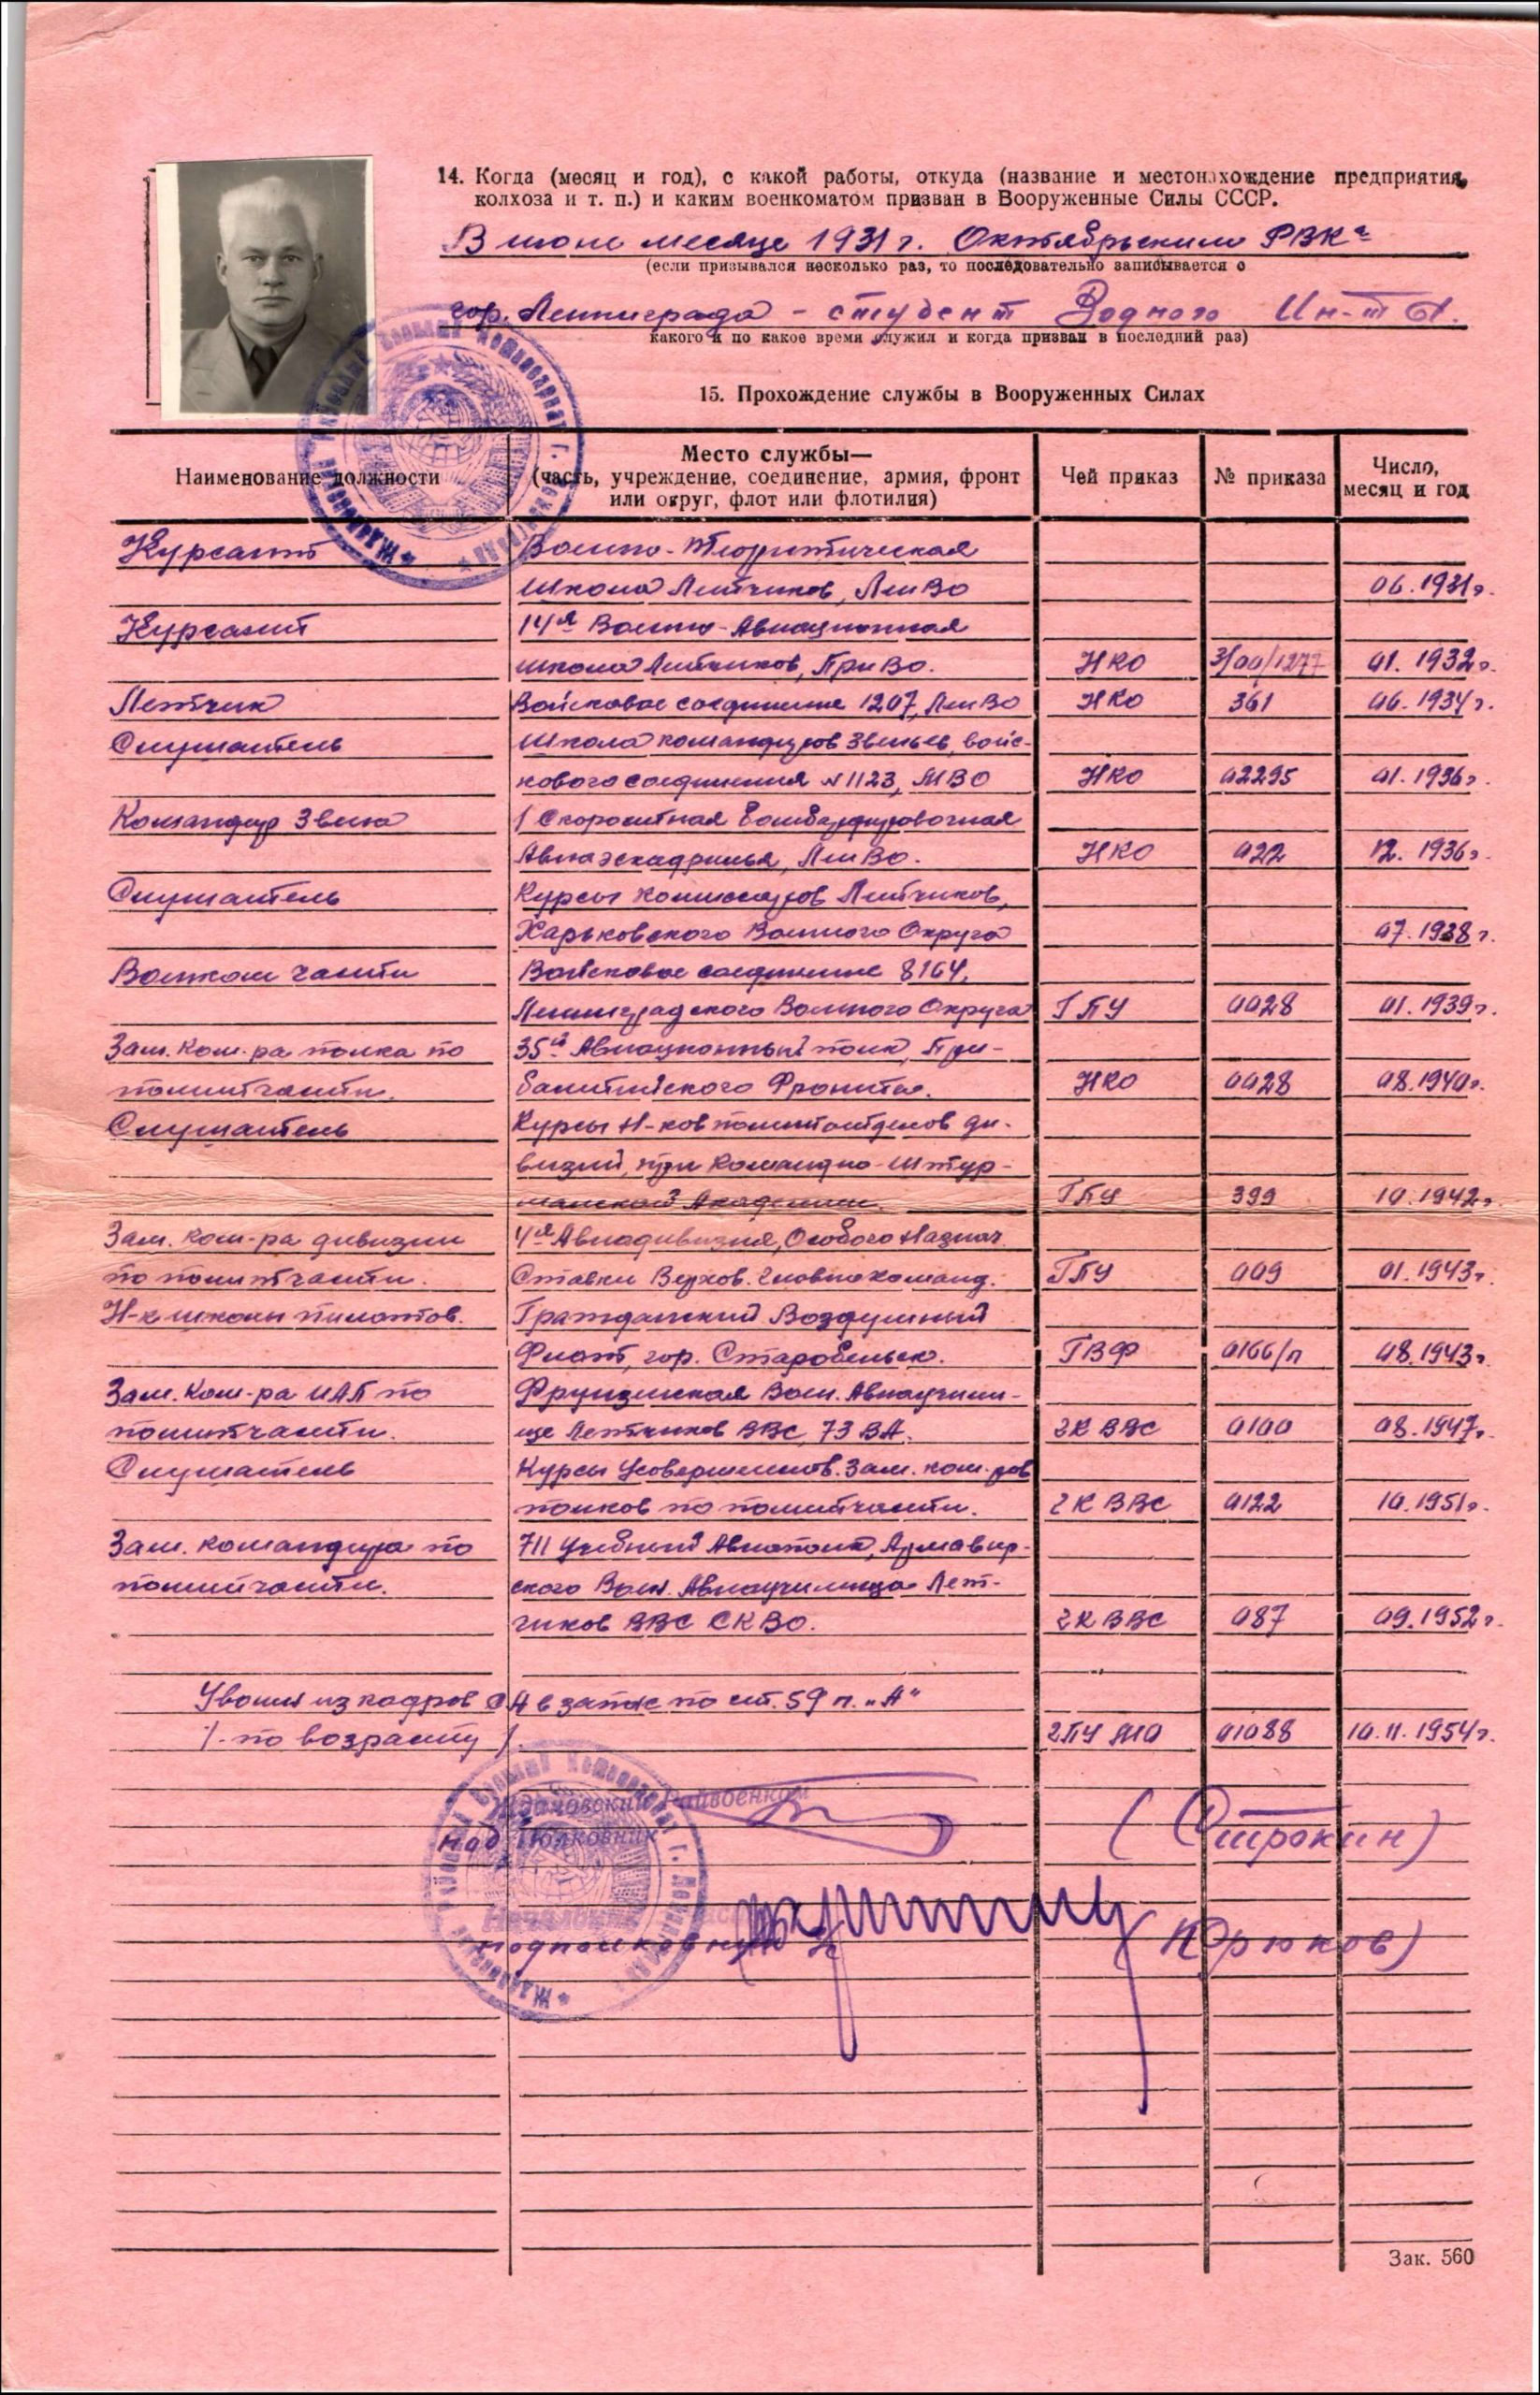 Service Record of Kirenyshev